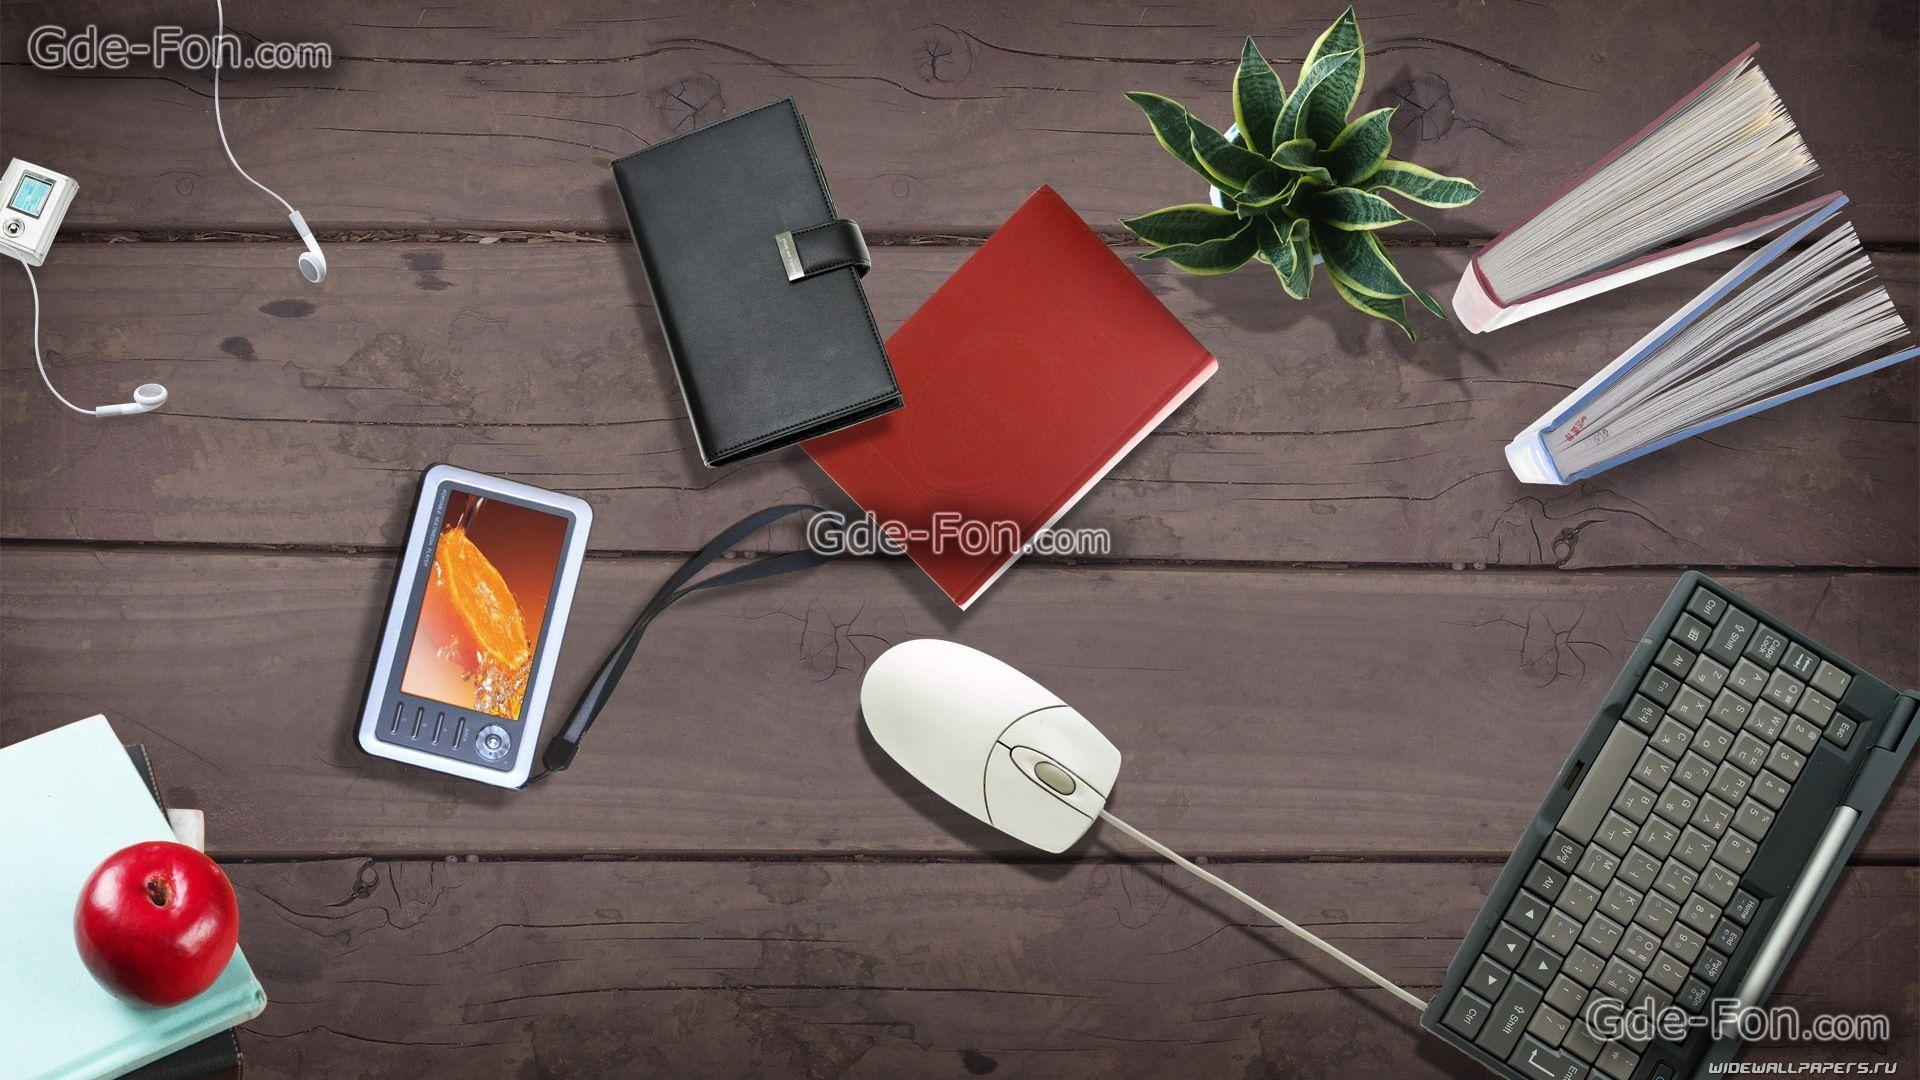 Download wallpaper computer, mouse, office desk, flower free